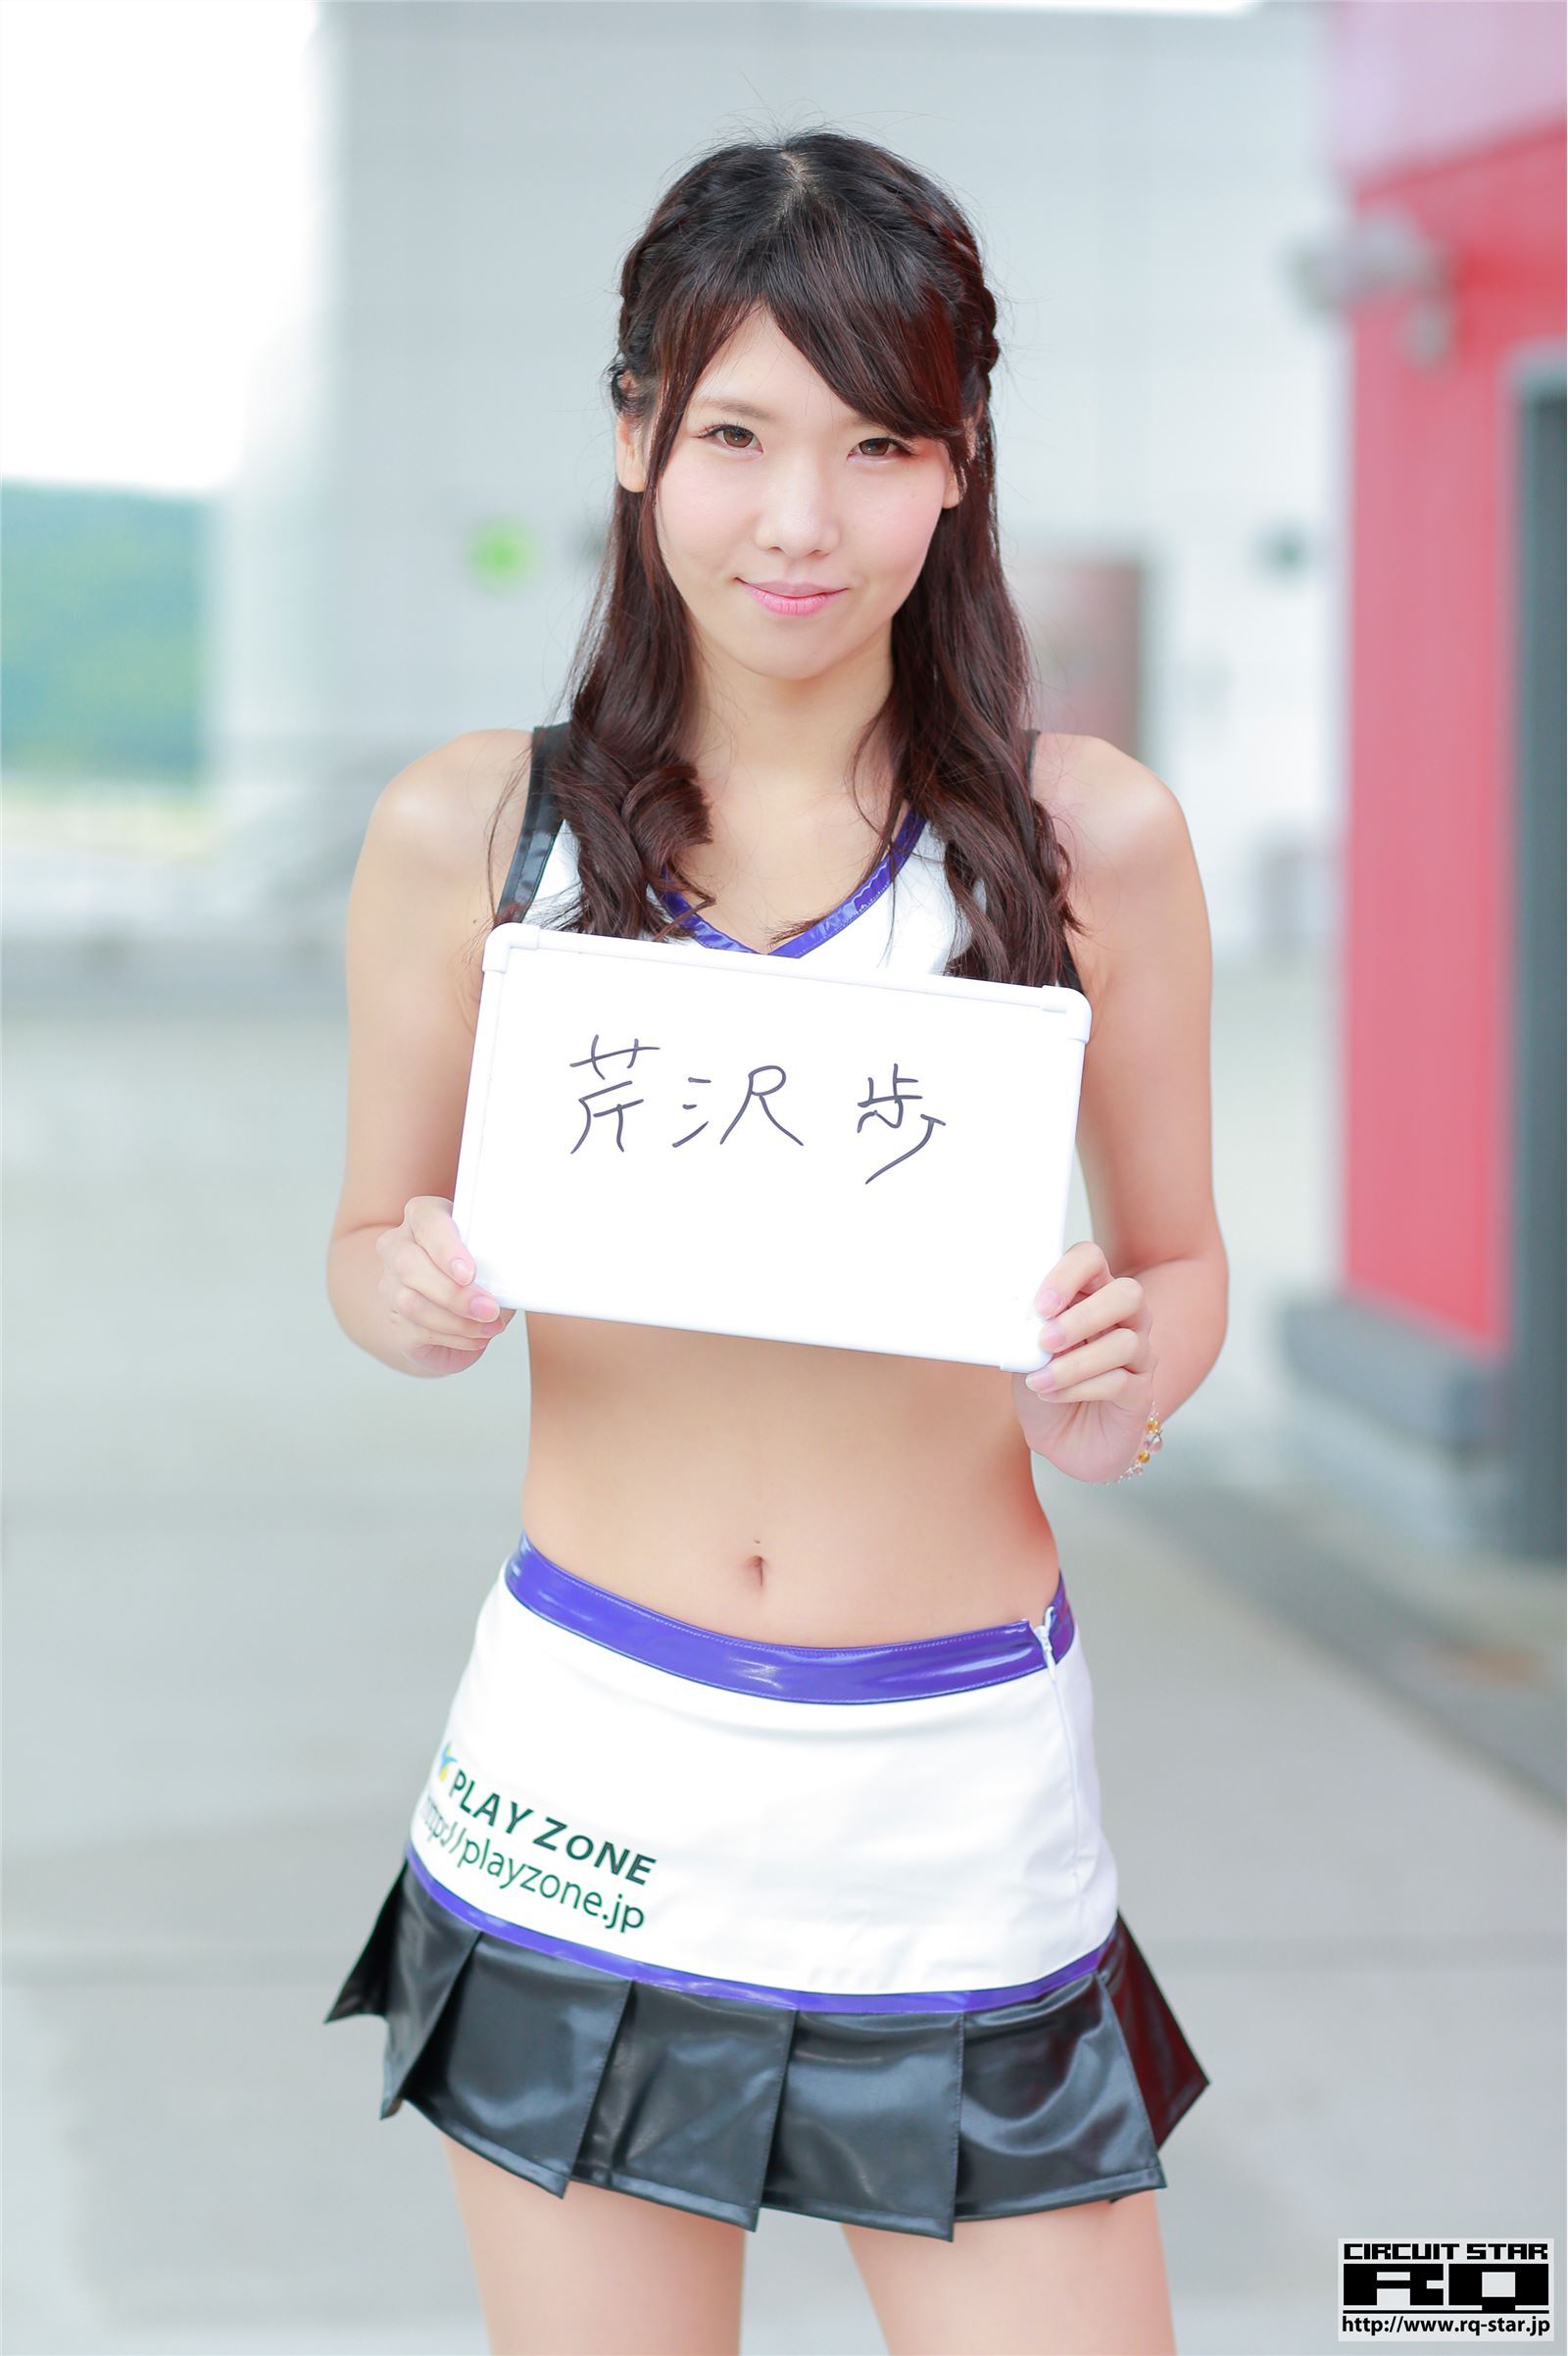 [rq-star] January 19, 2018 Ayumi serizawa race queen